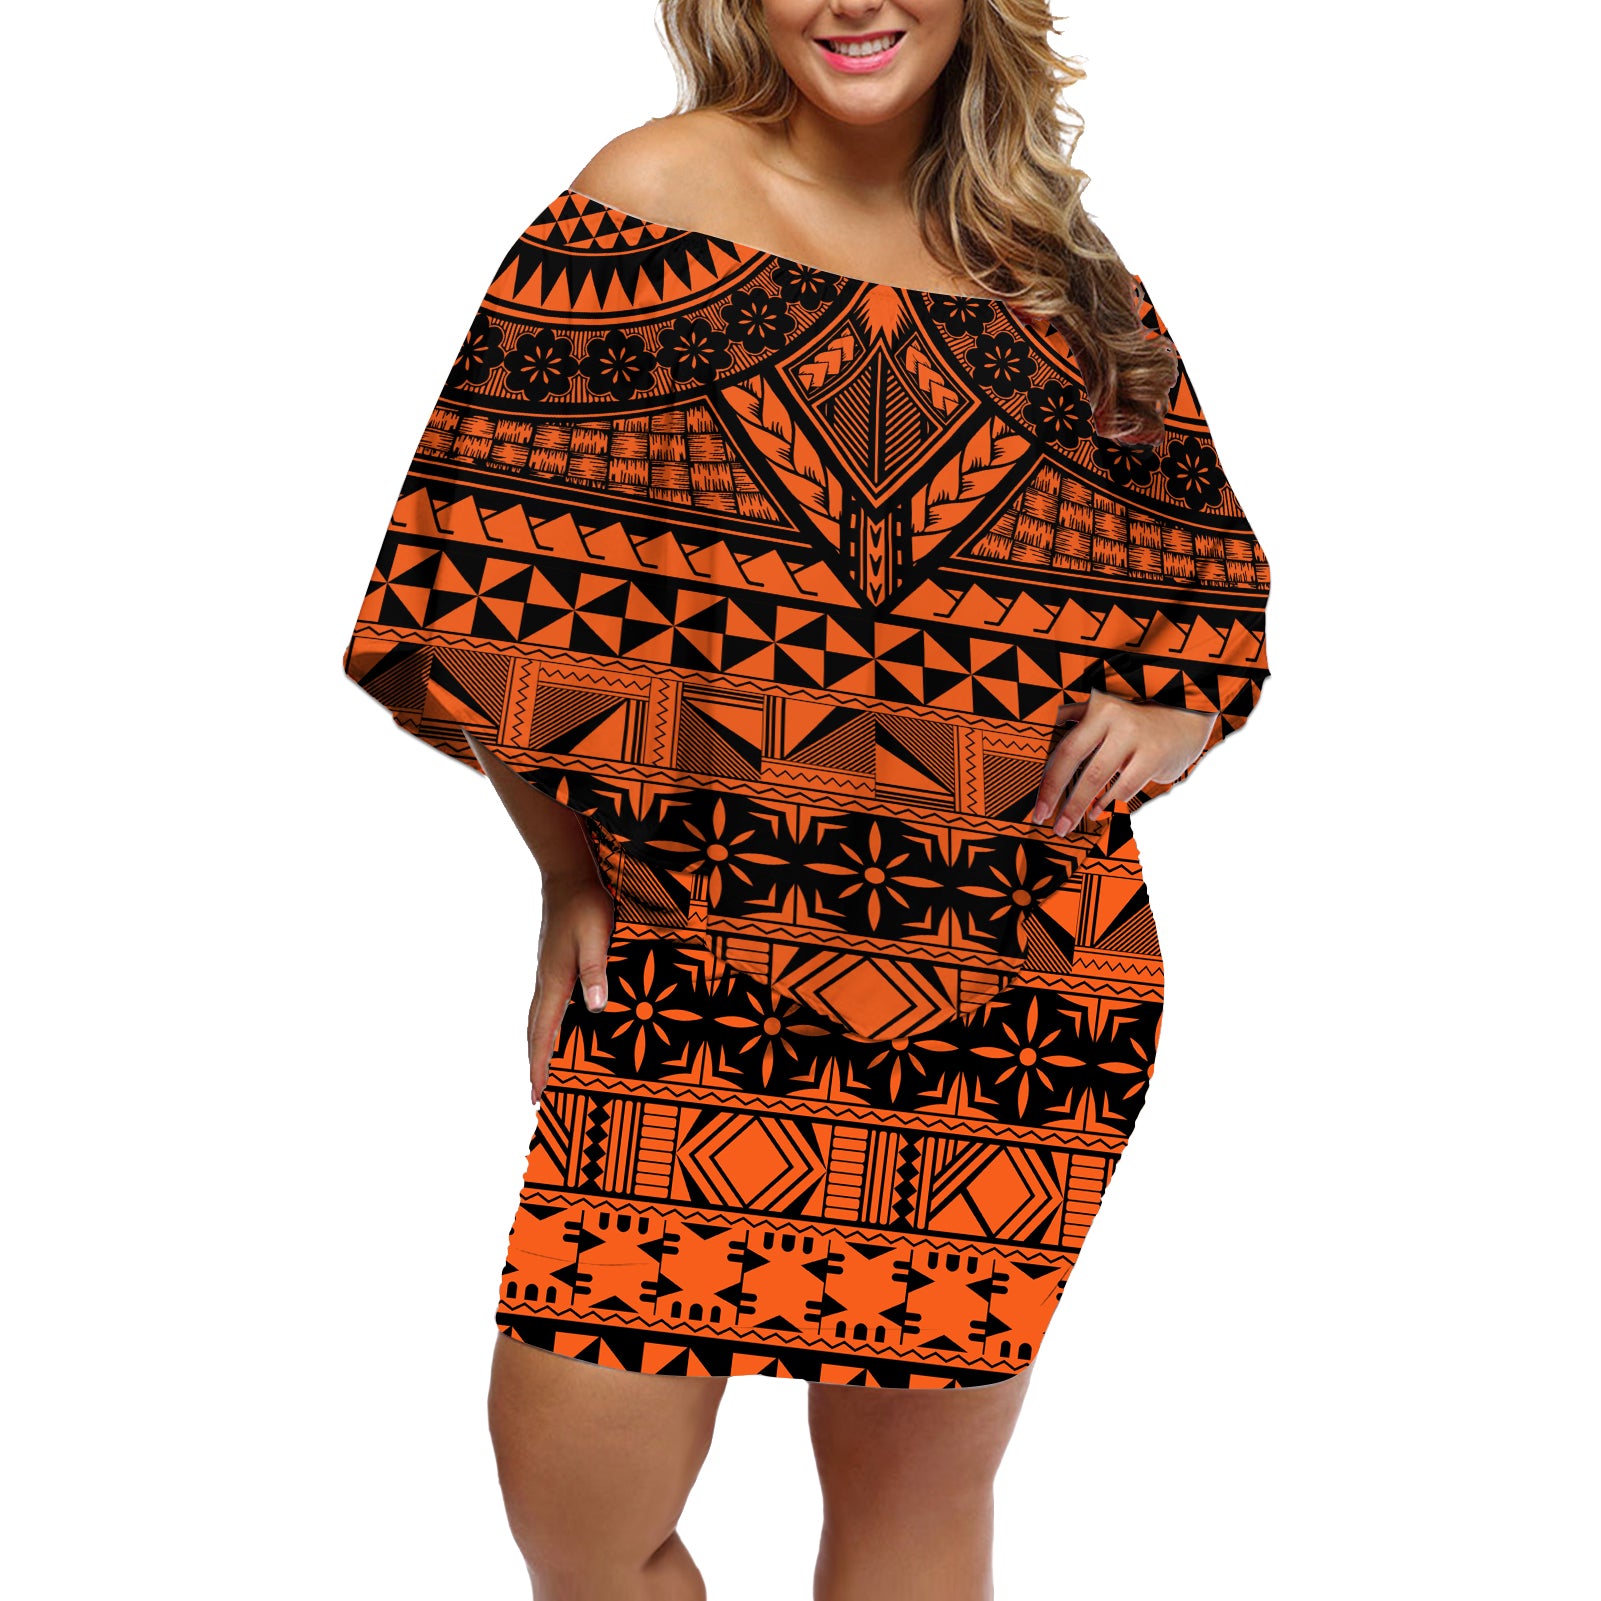 Halo Olaketa Solomon Islands Off Shoulder Short Dress Melanesian Tribal Pattern Orange Version LT14 Women Orange - Polynesian Pride